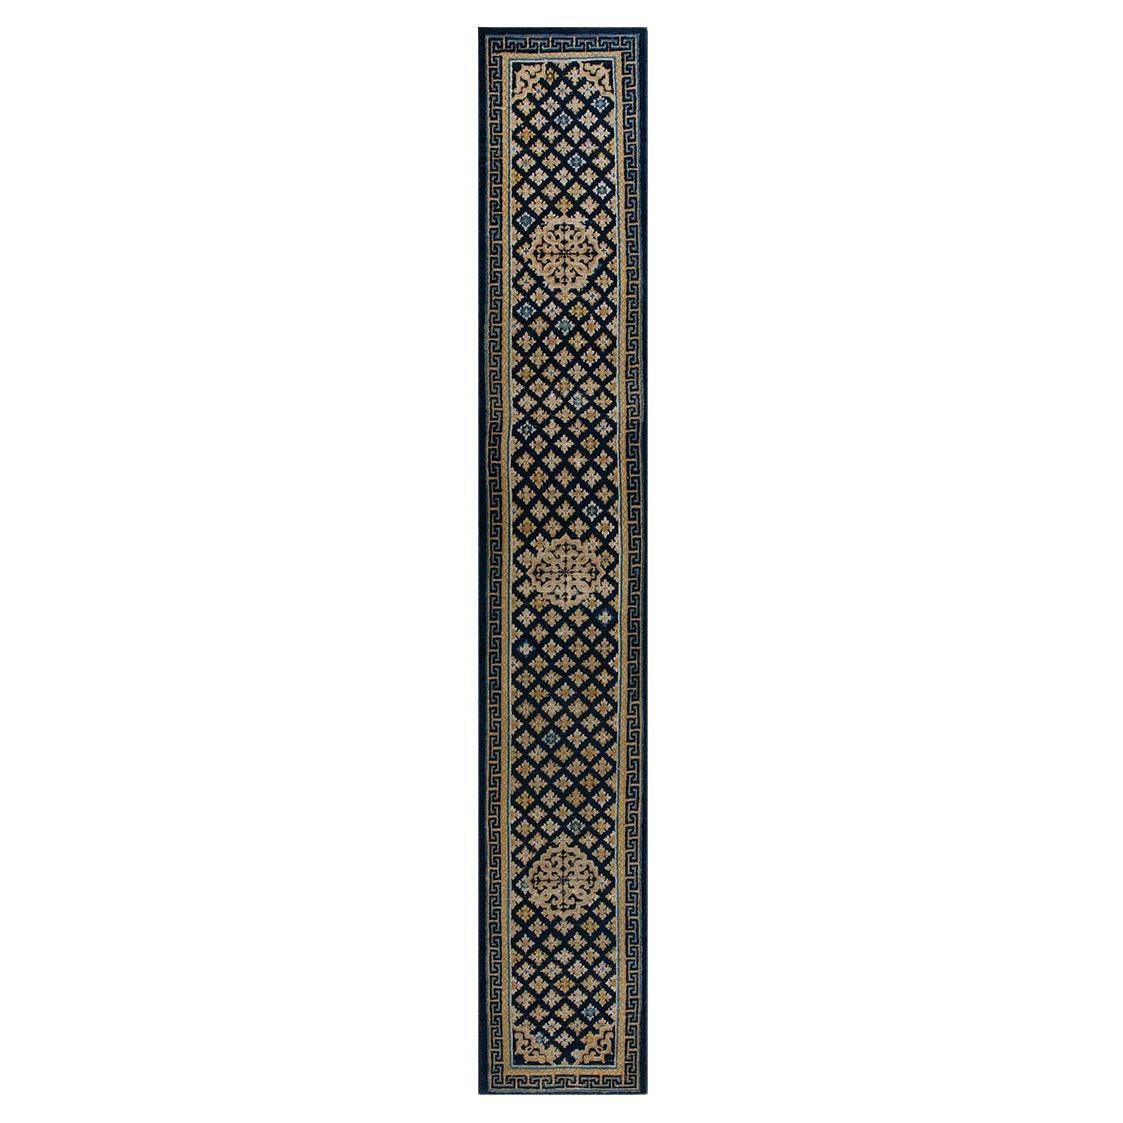 Early 19th Century W. Ningxia Carpet 2' 2" x 13' 10" 